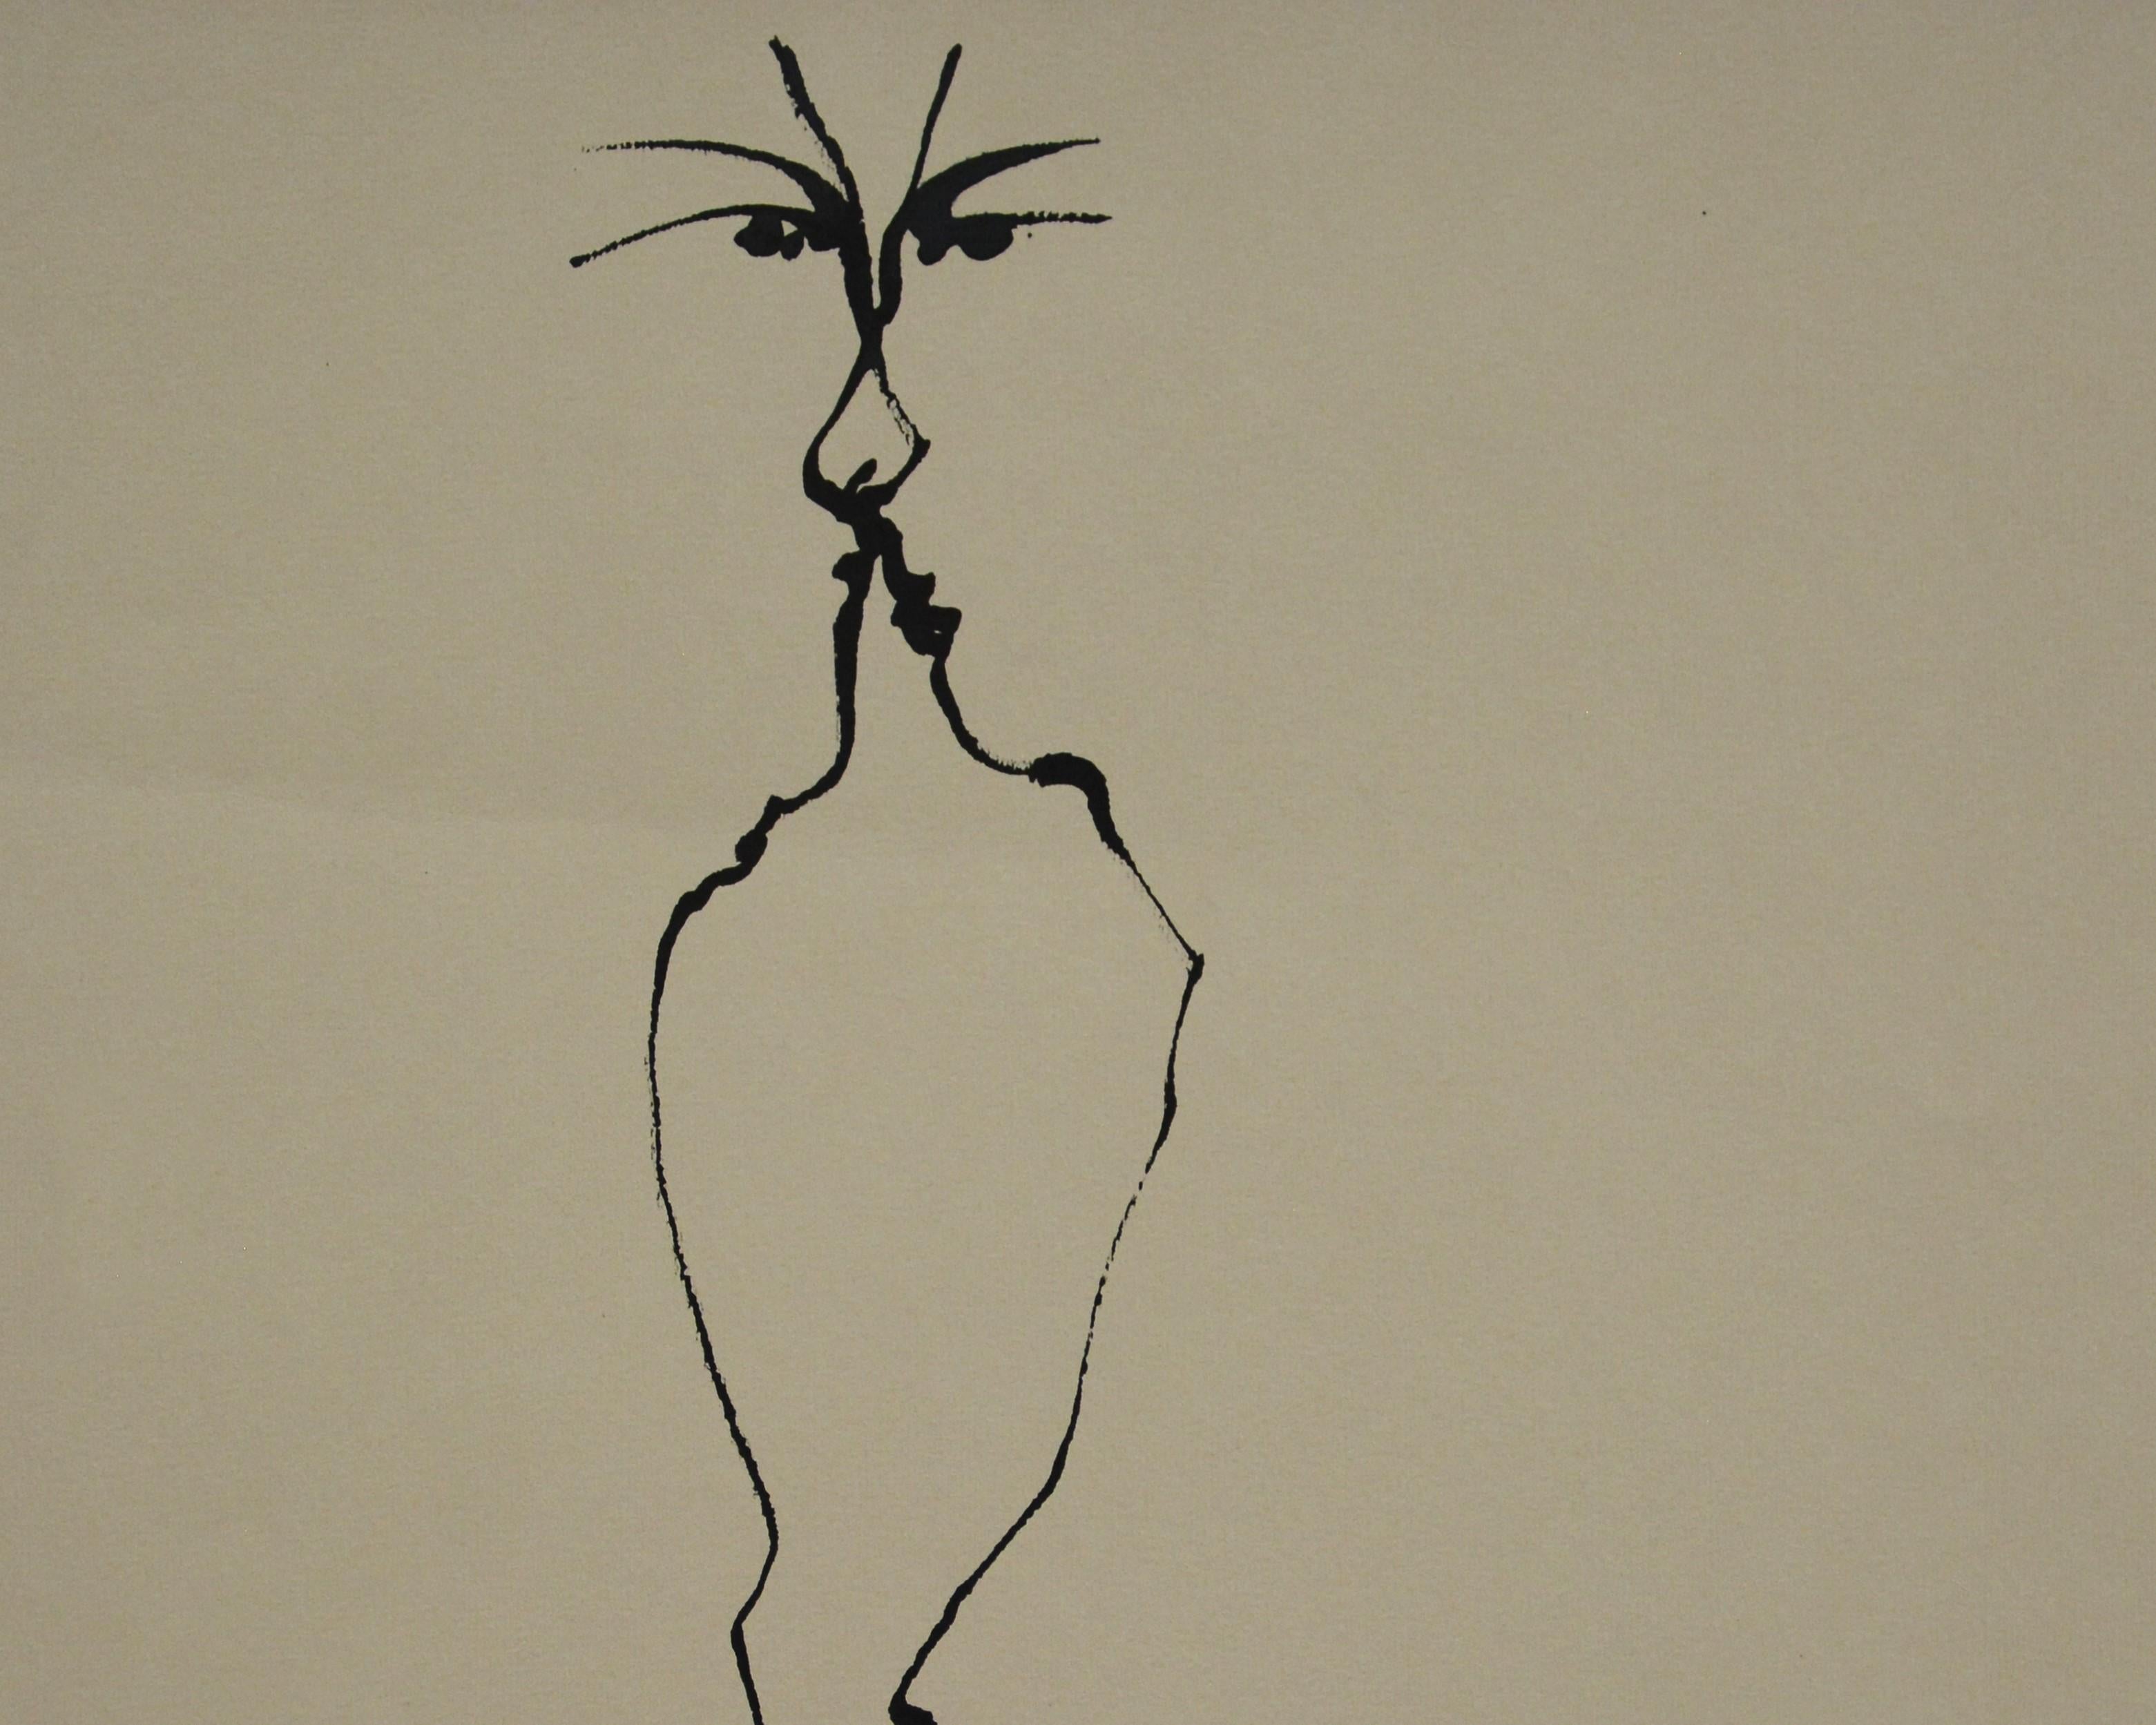 Luis Miguel Valdes, ¨Linea con cara-3¨, 2004, Work on paper, 11.8x13.8 in - Art by Luis Miguel Valdes 